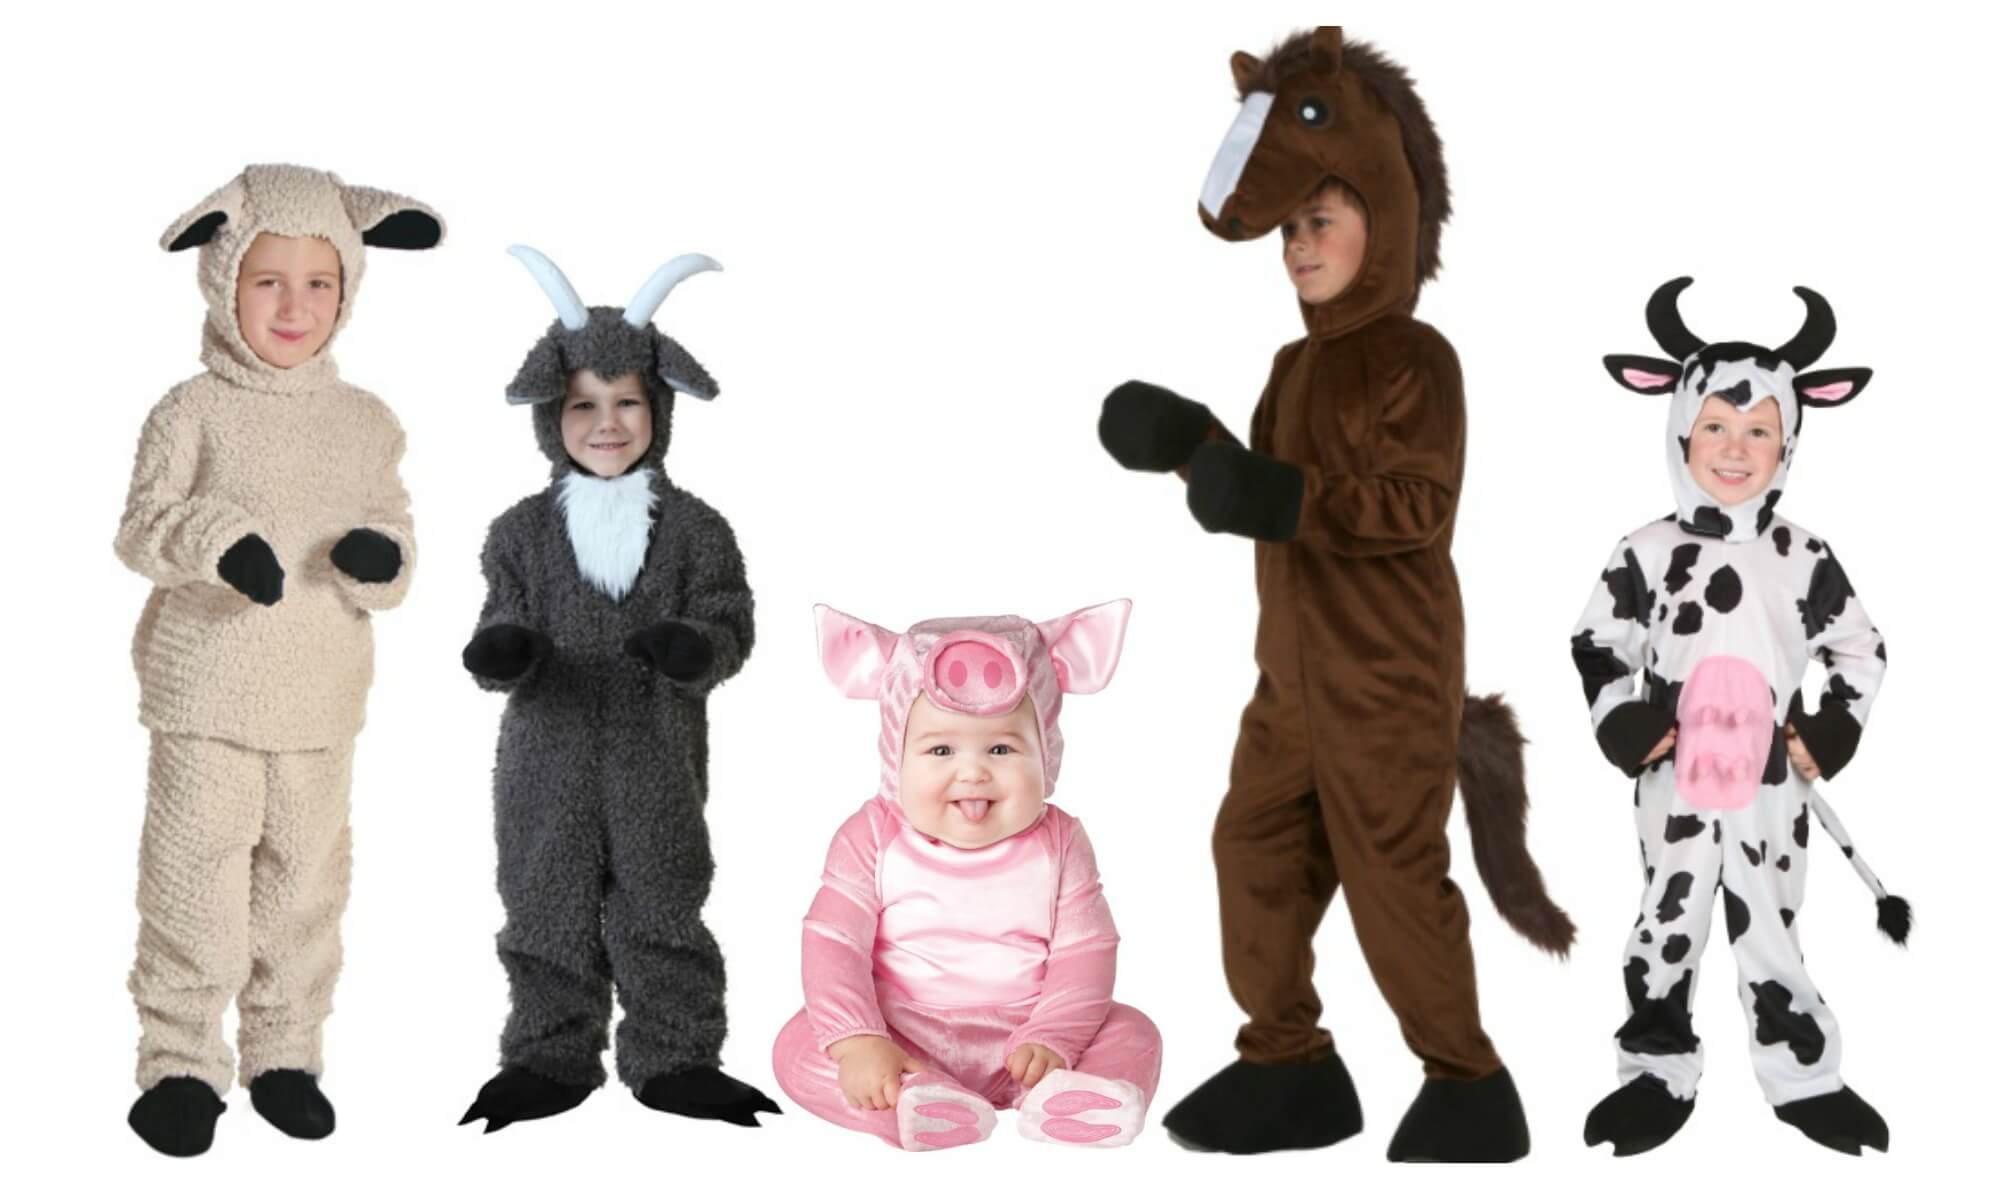 Farm animal costumes for kids